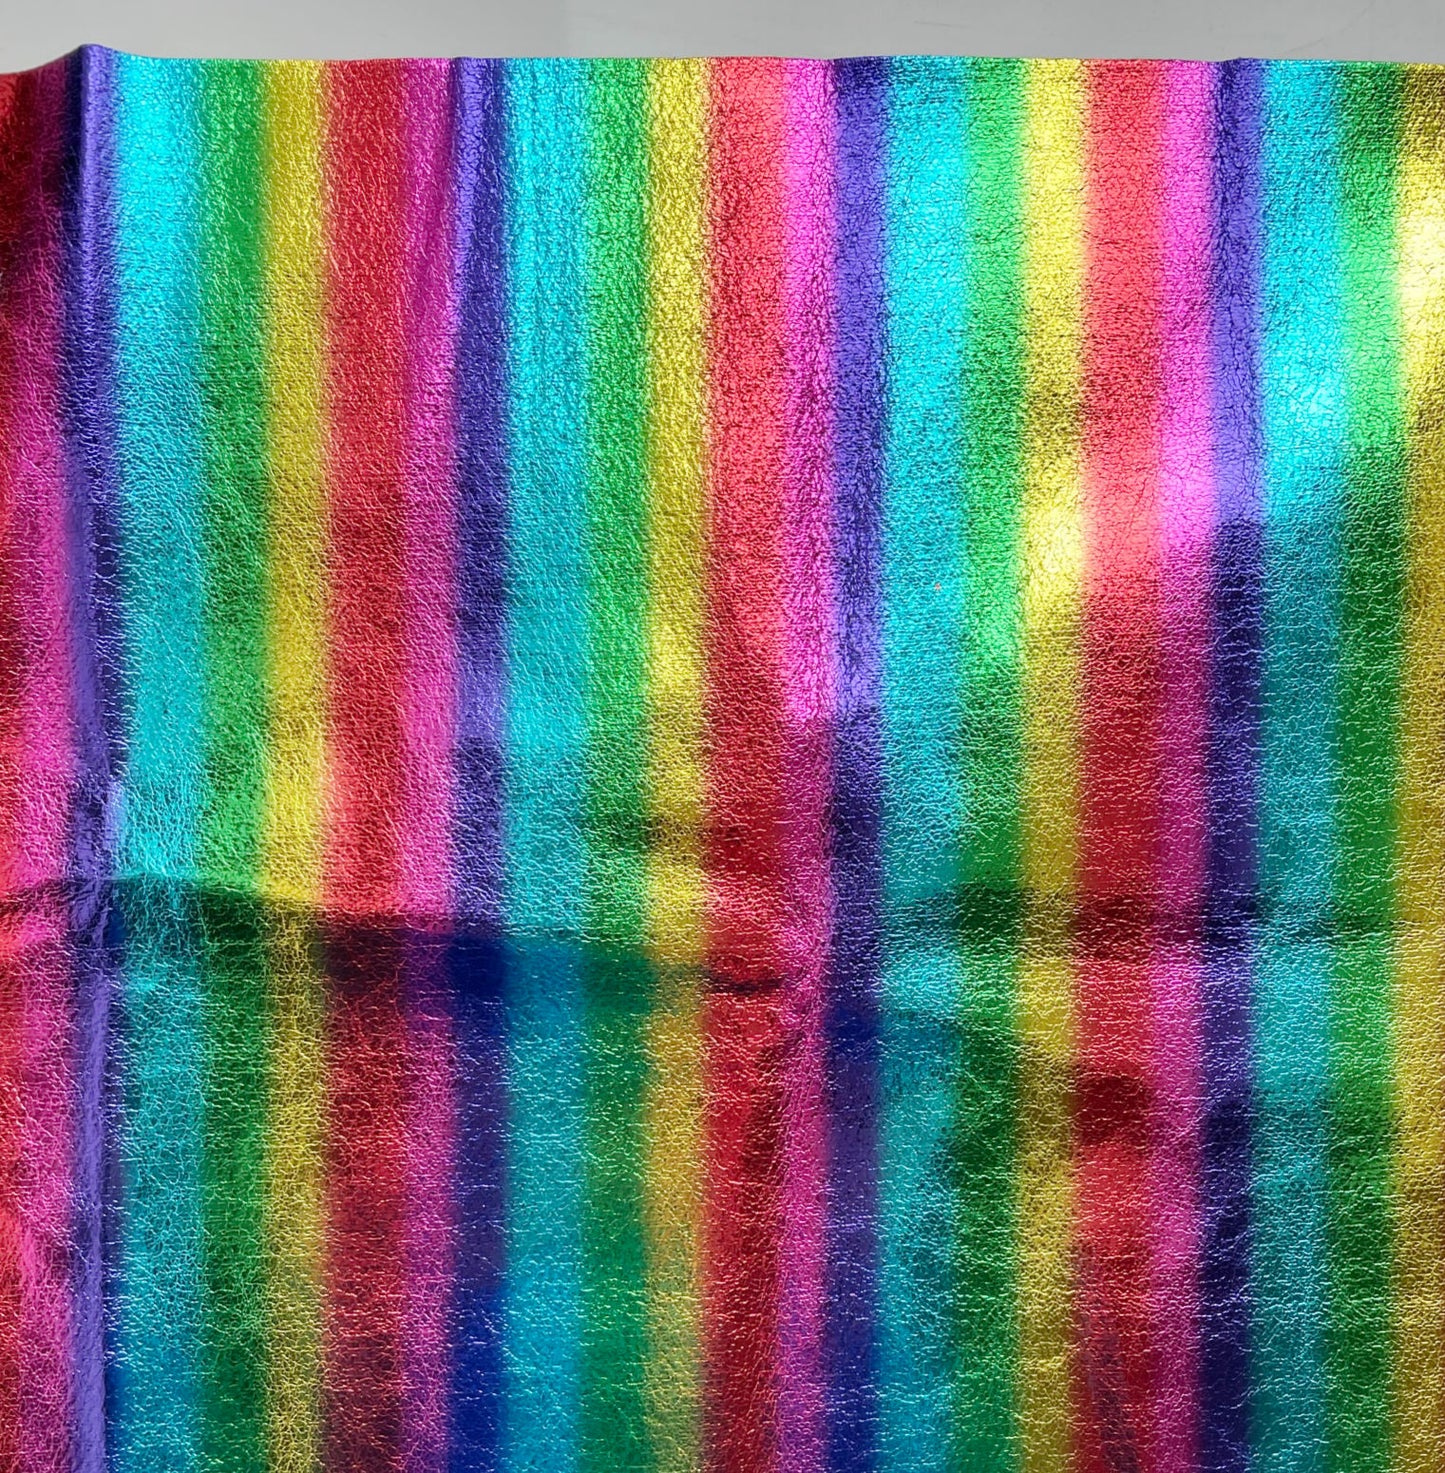 Rainbow soft vinyl 18x56